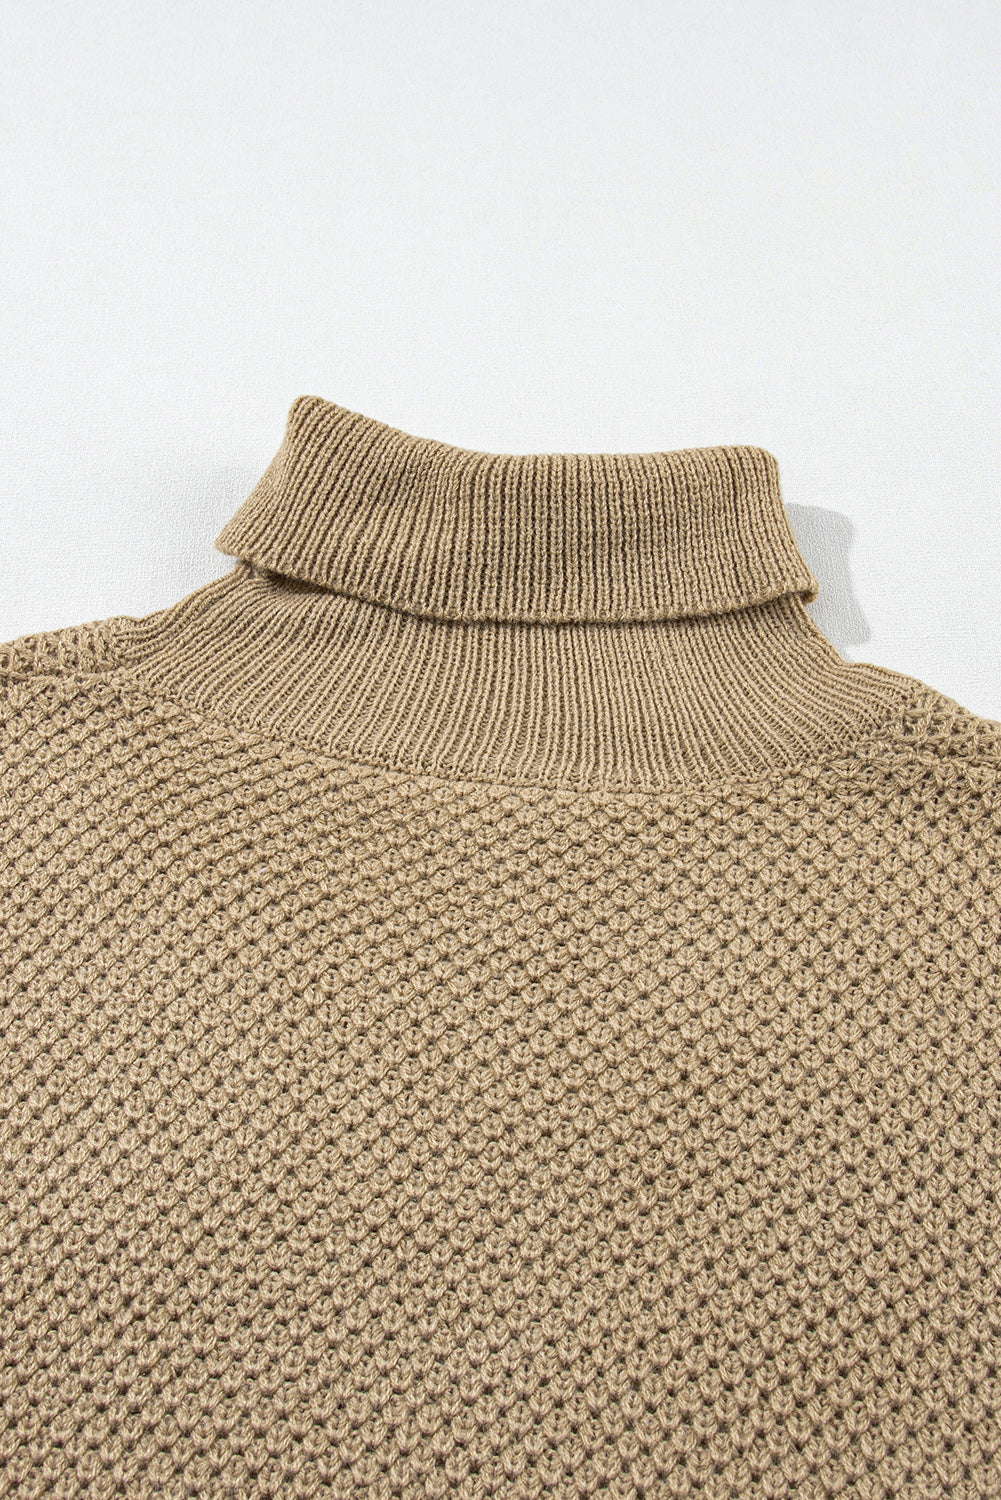 Light Grey Turtleneck Knitted Texture Short Sleeve Sweater